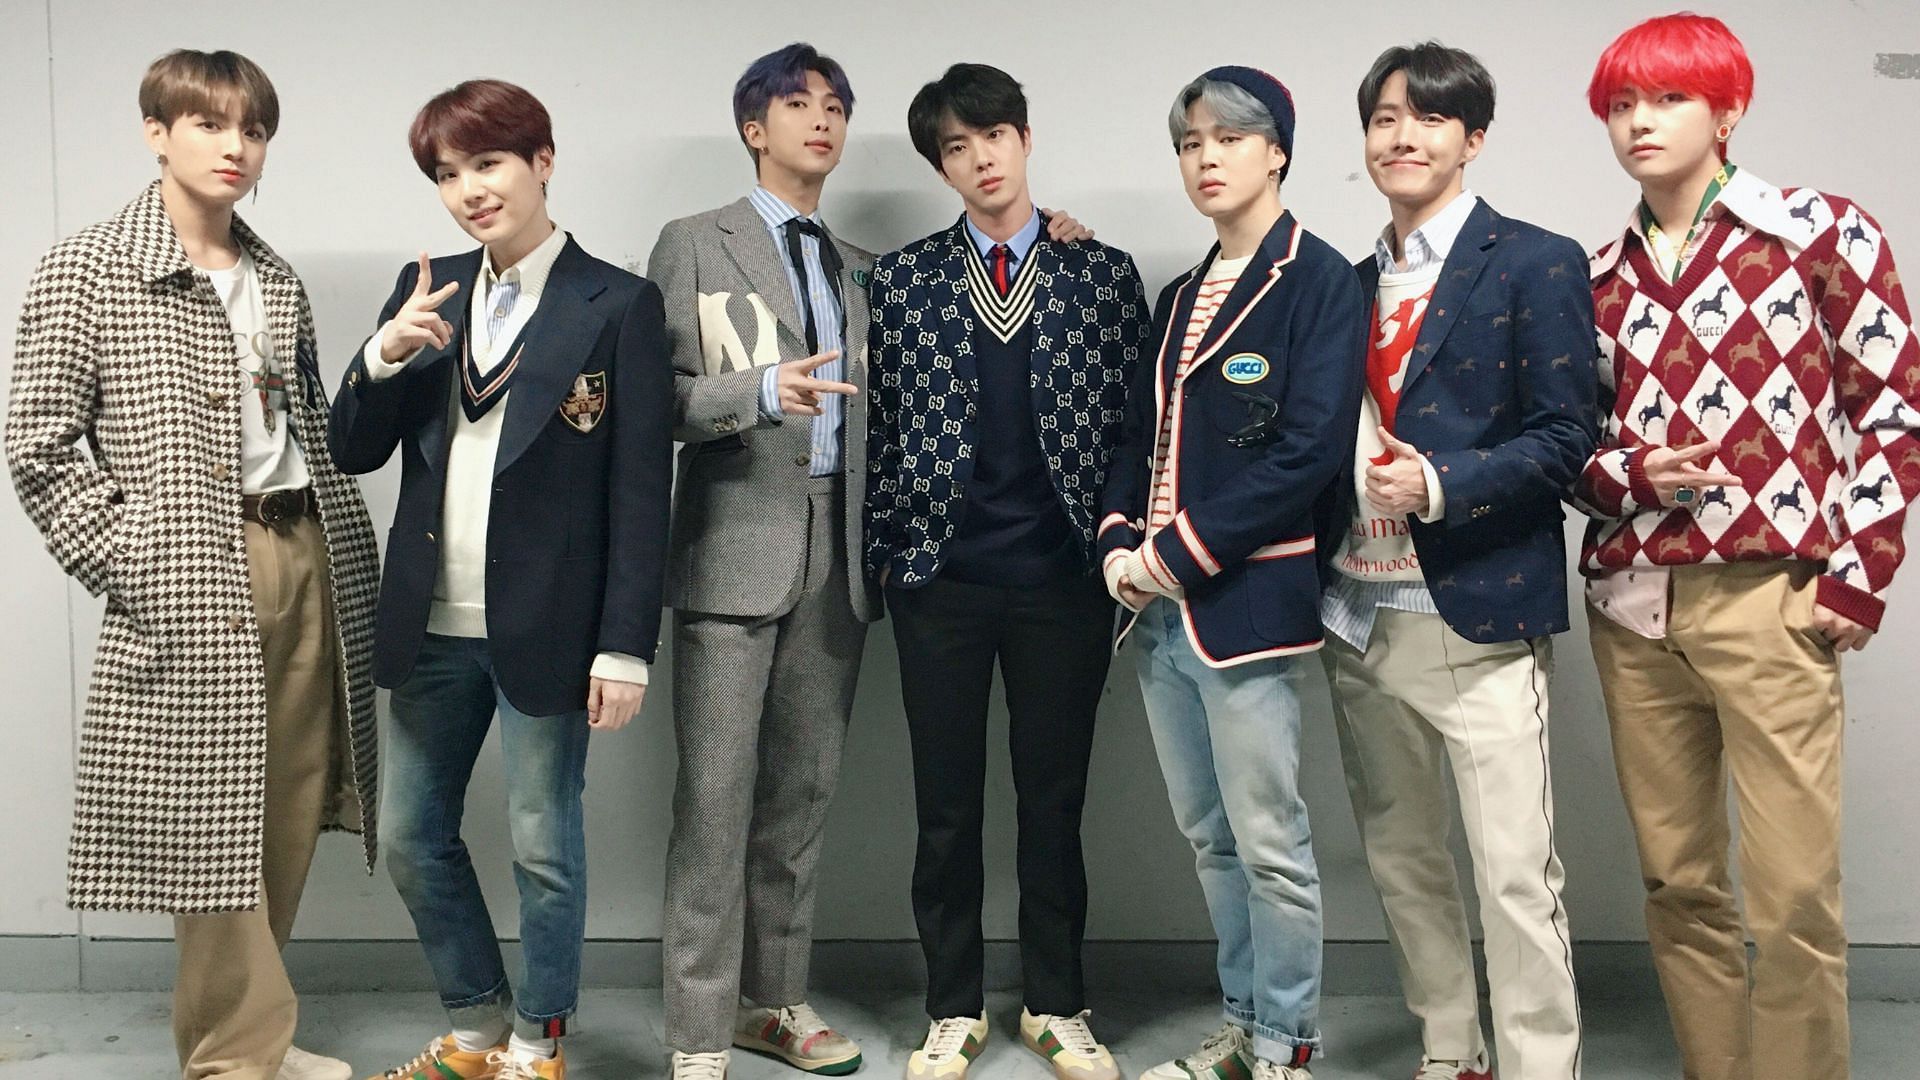 BTS backstage at the 2018 Melon Music Awards (Twitter/ bts_bighit)